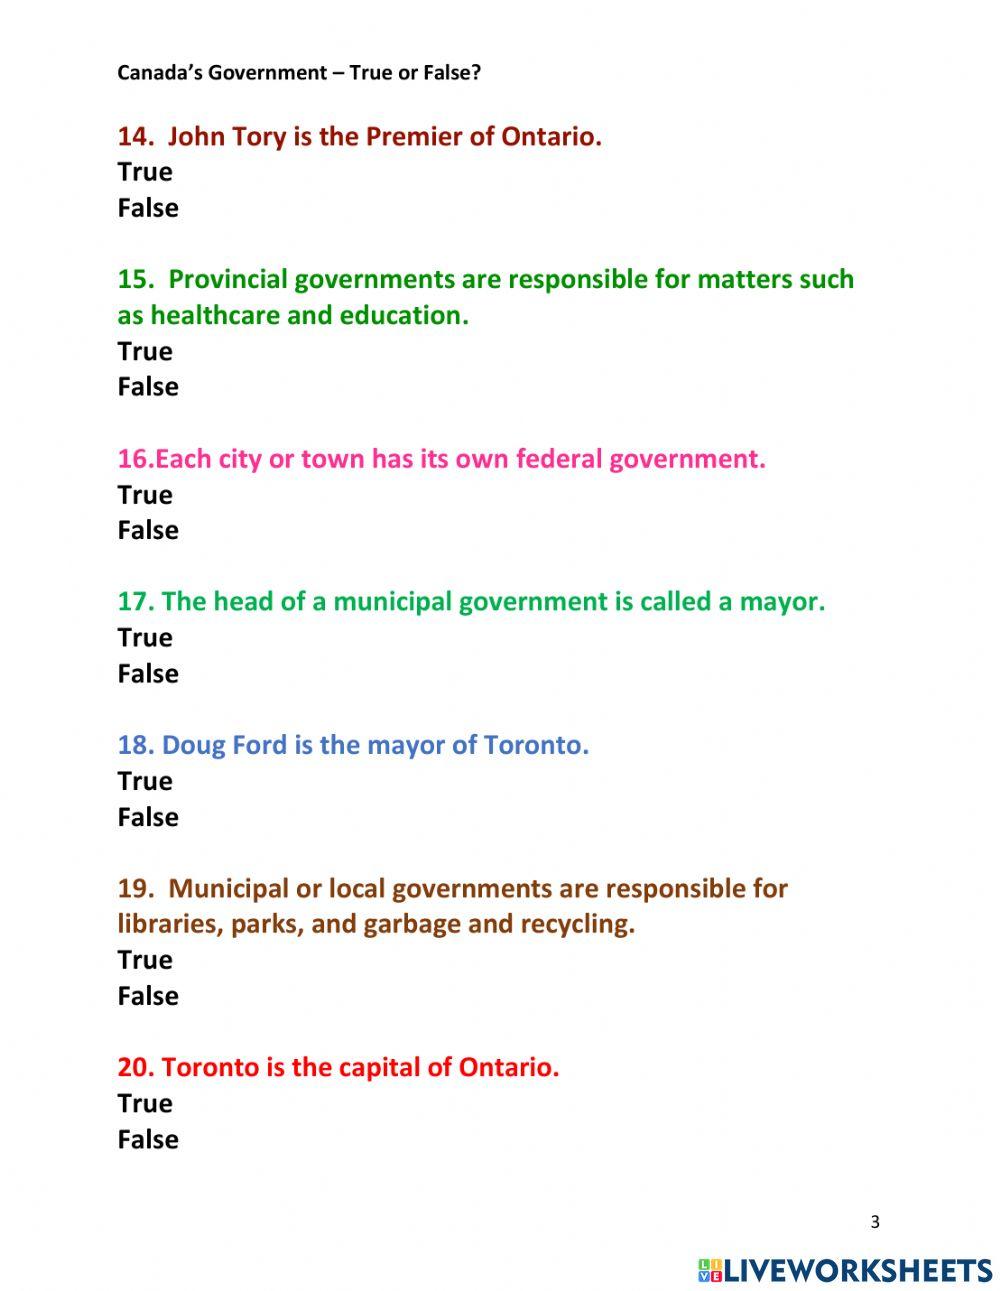 Canada - Levels of Government -True or False